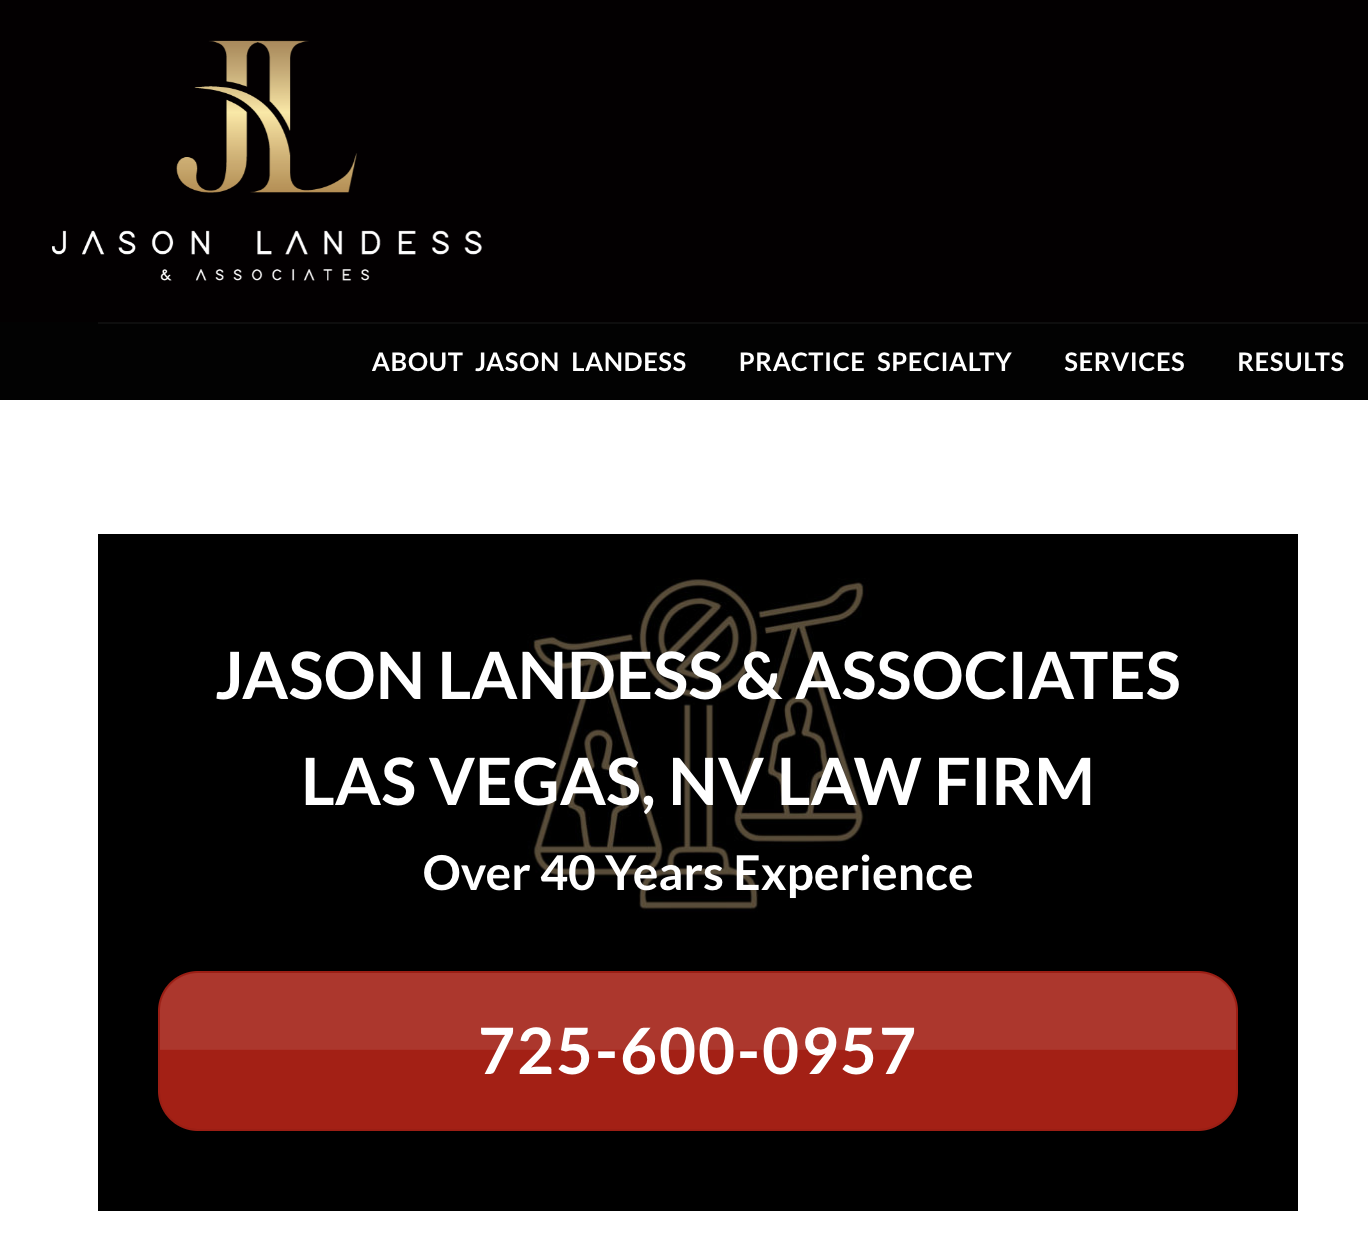 Jason Landess Associates: